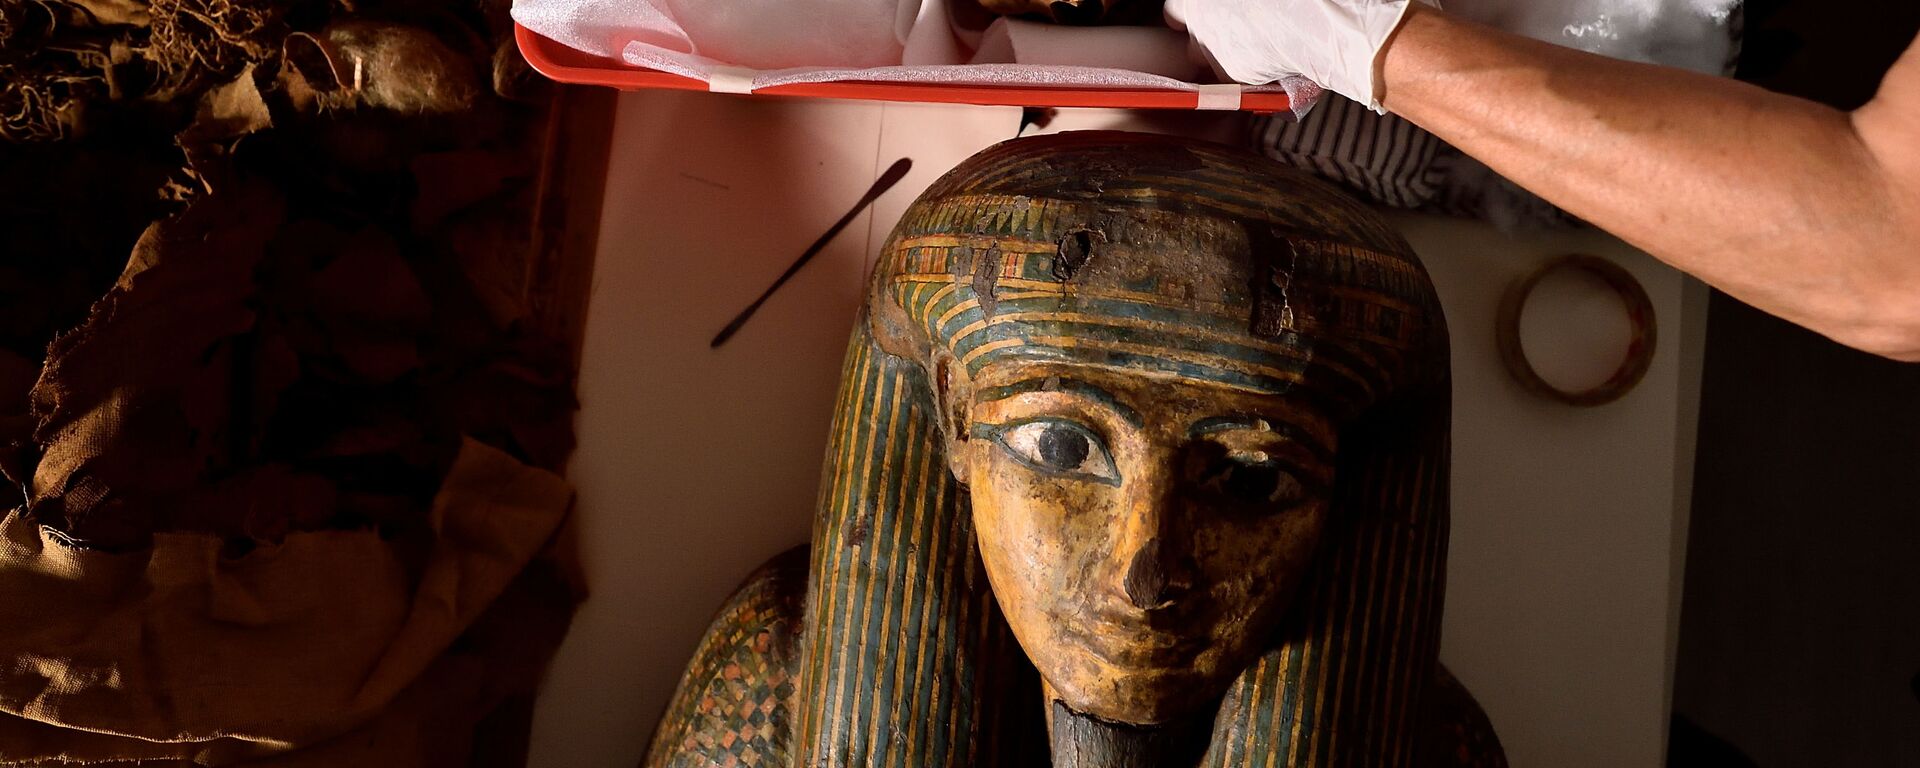 3,000-Year-Old Mystery: Secrets of Egyptian Mummy to Be Revealed - Sputnik International, 1920, 23.06.2021